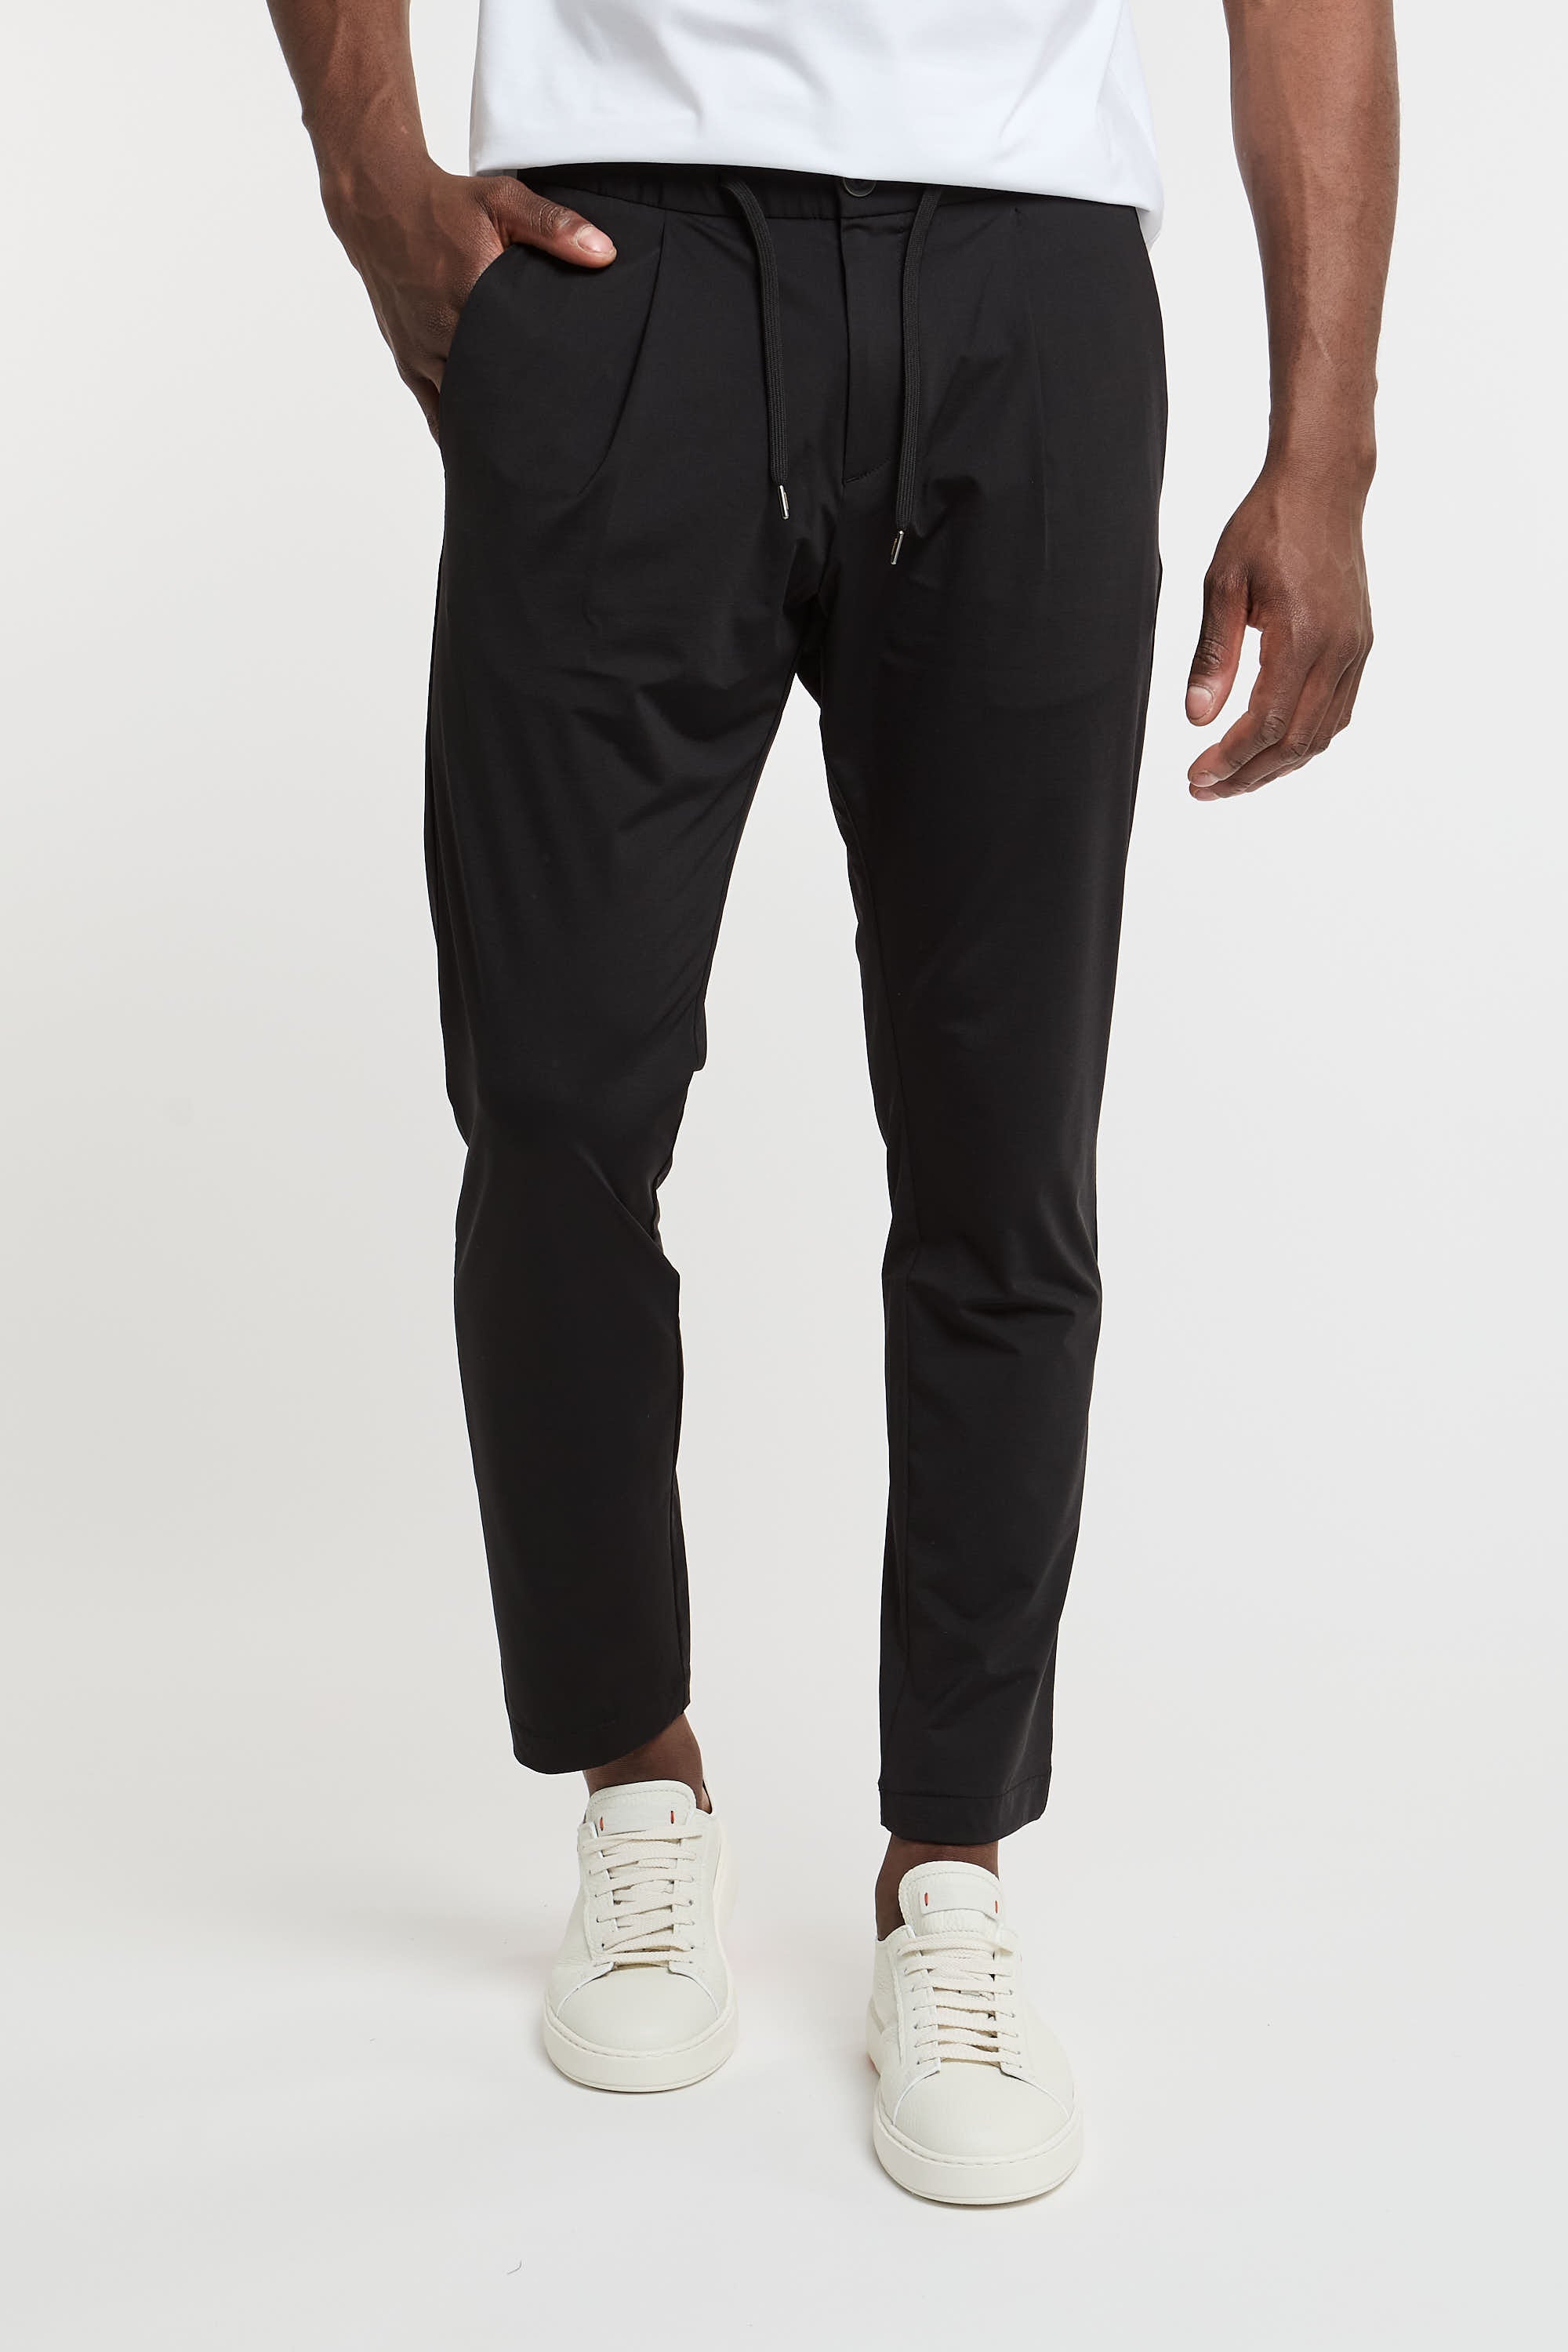 Herno Black Nylon Jersey Pants-1